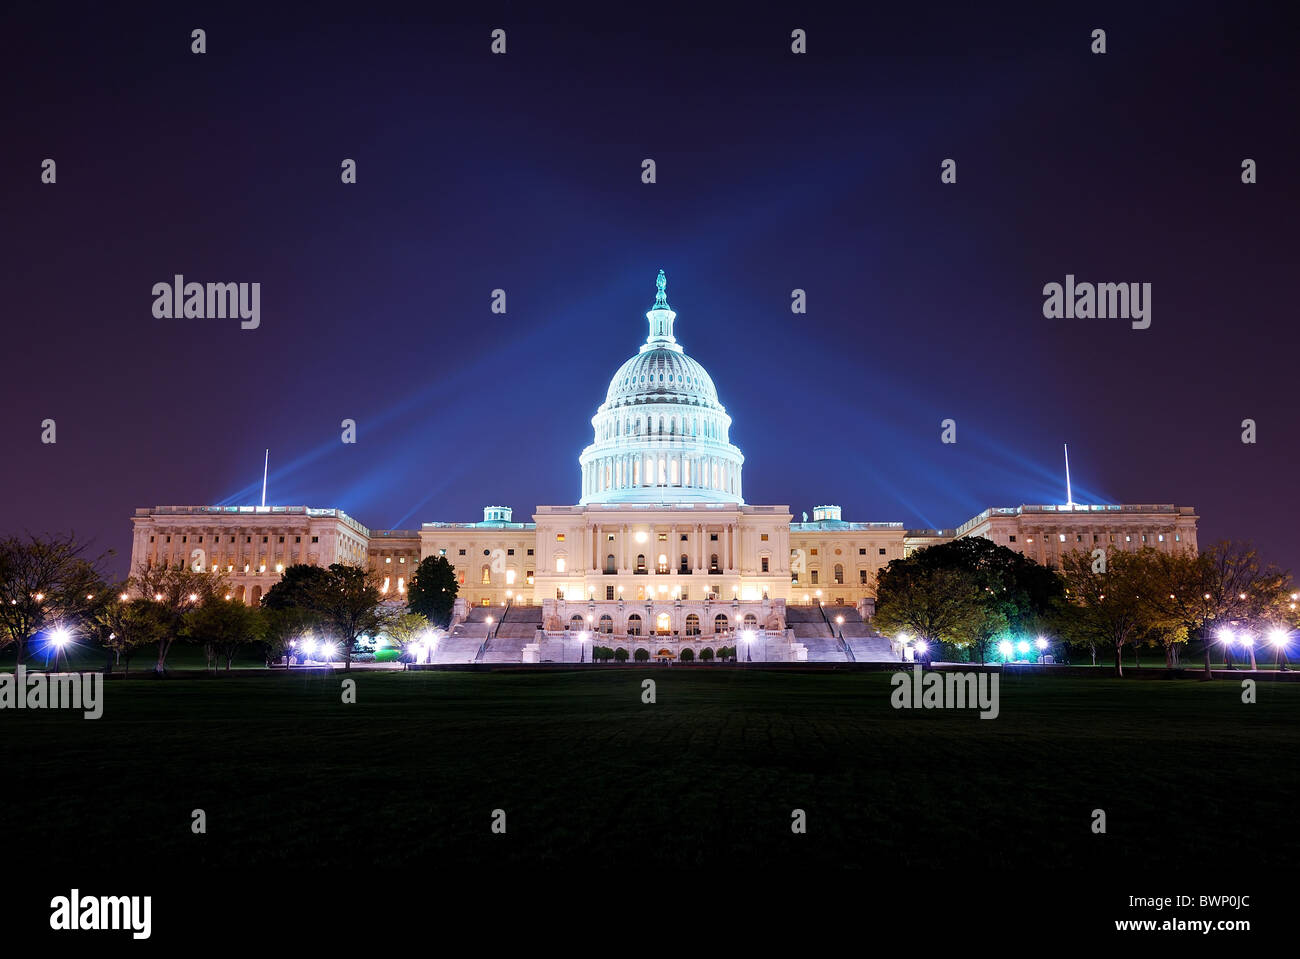 Capitol hill building at night illuminated with light, Washington DC. Stock Photo